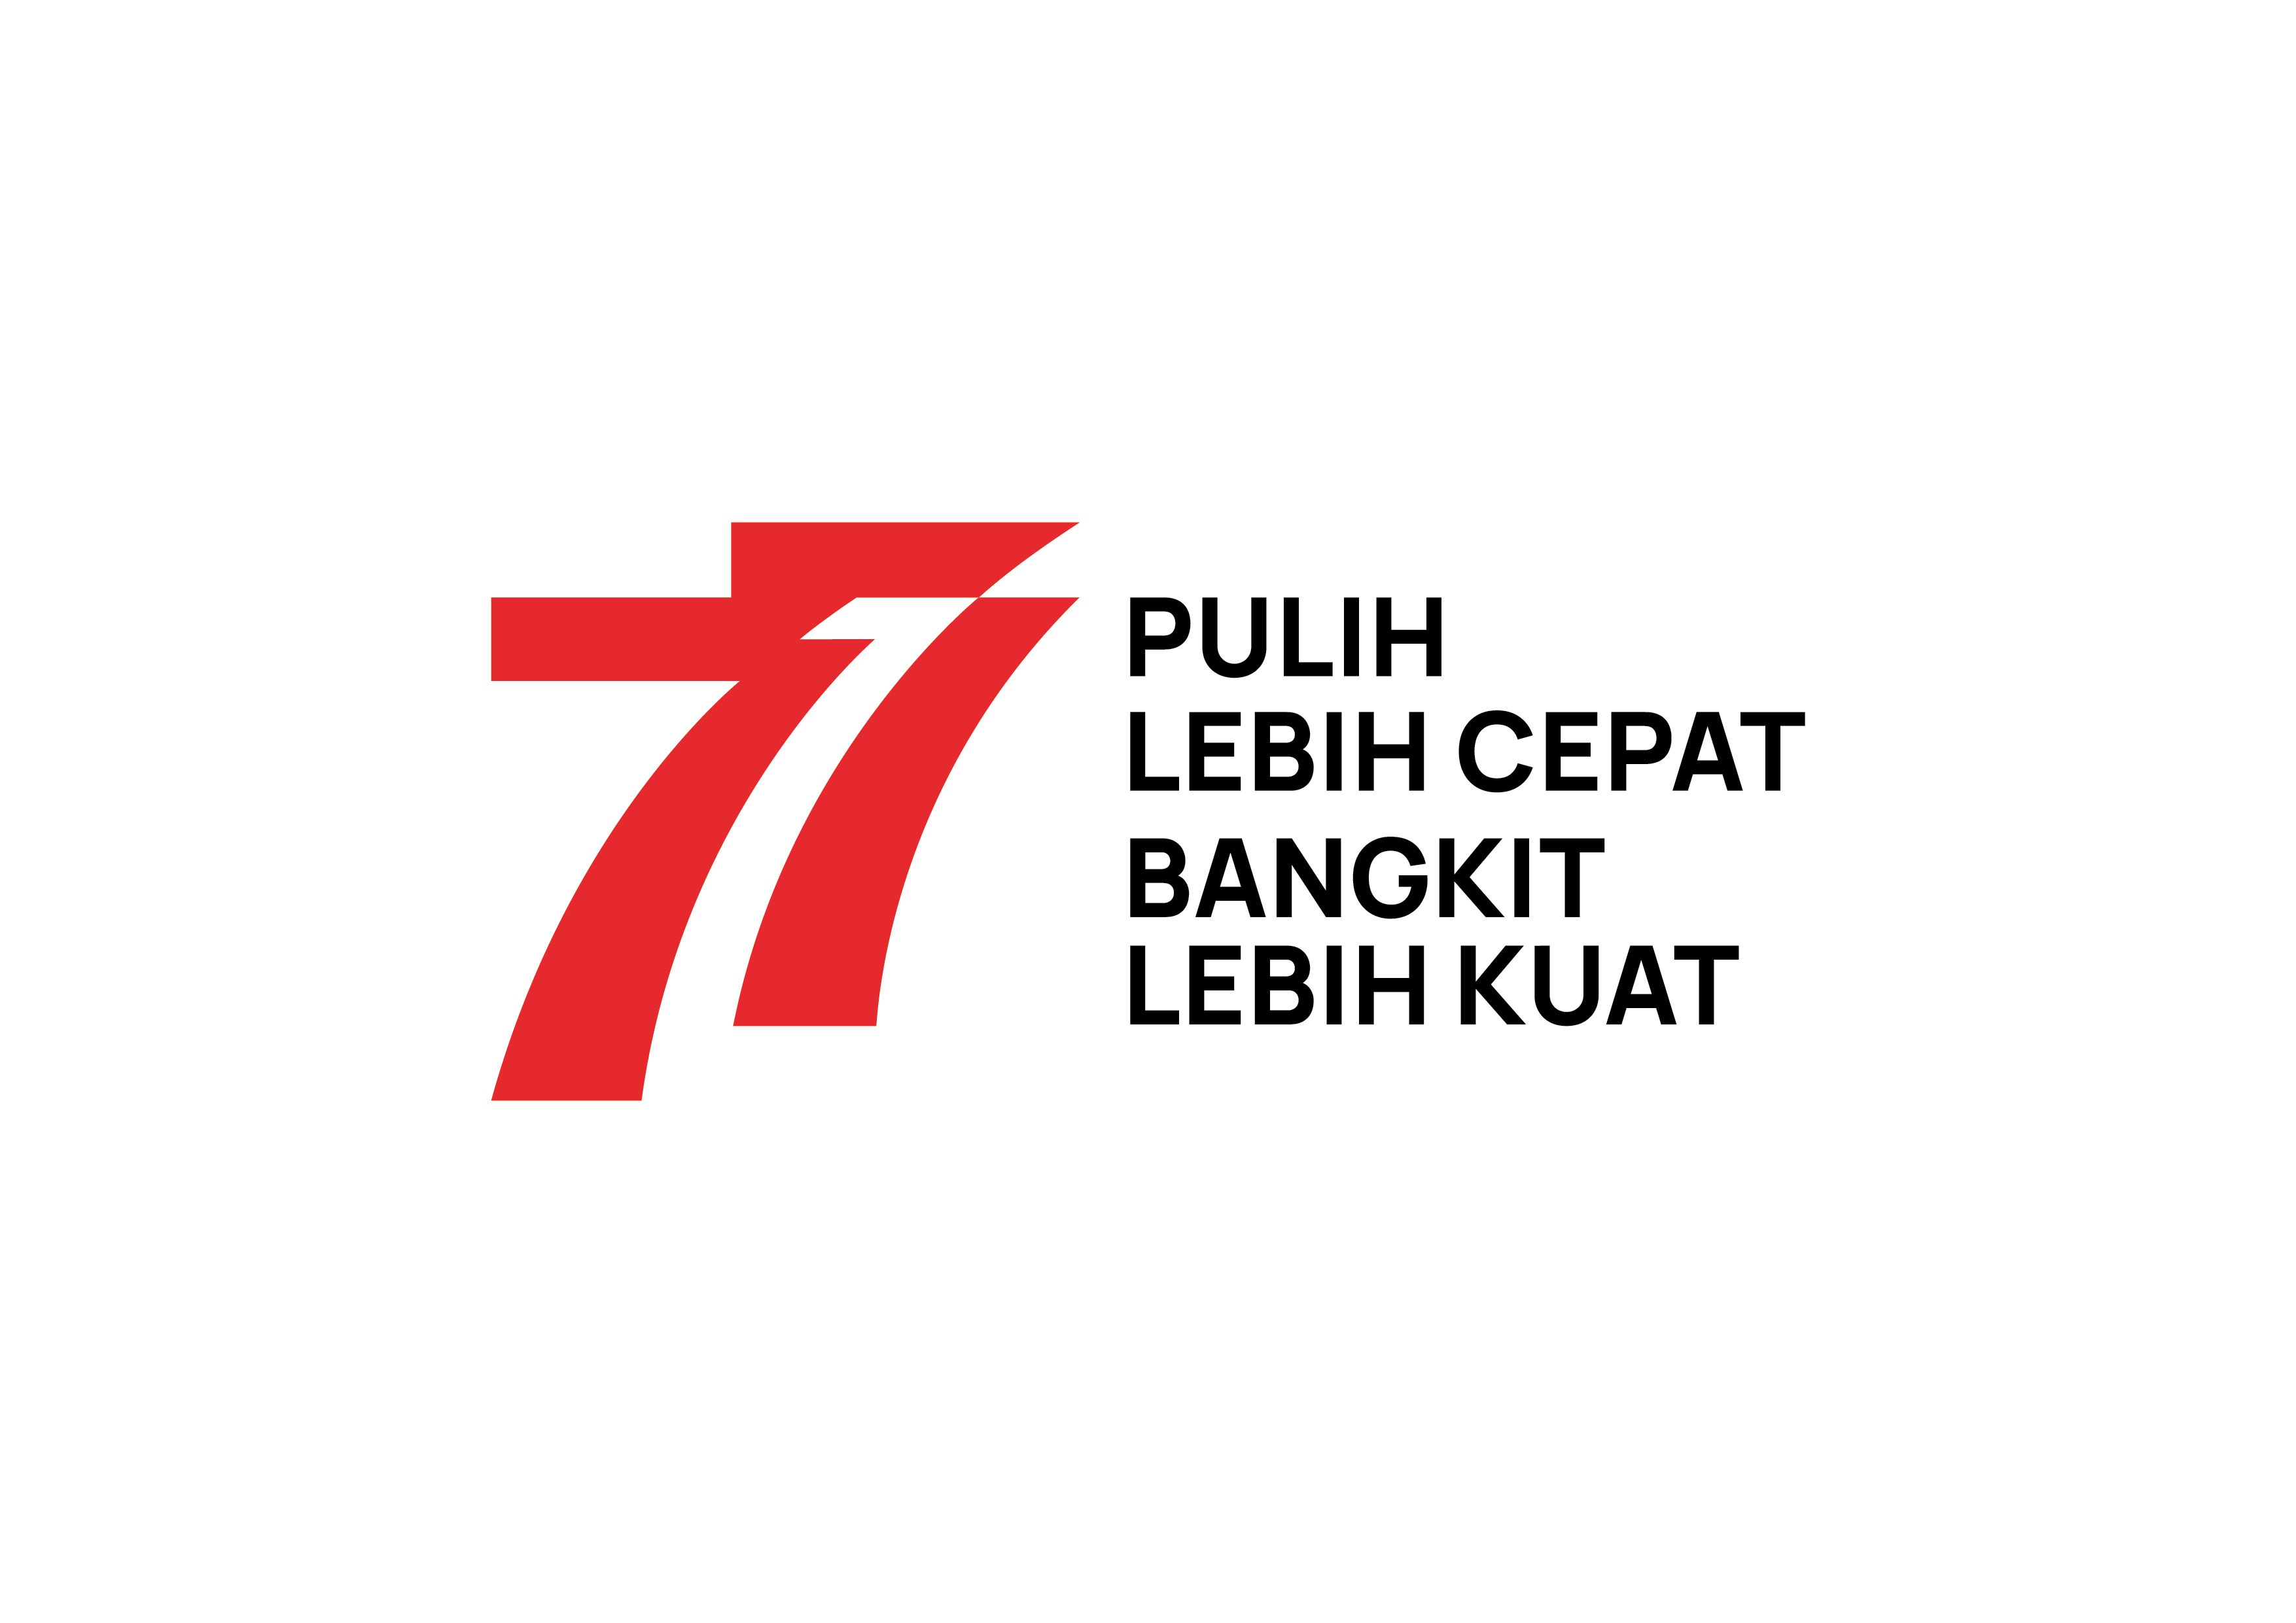 7 Filosofi Logo Hut Ri Ke 77 Nomor 7 Berdasarkan Semboyan Indonesia Portal Sulut 9541